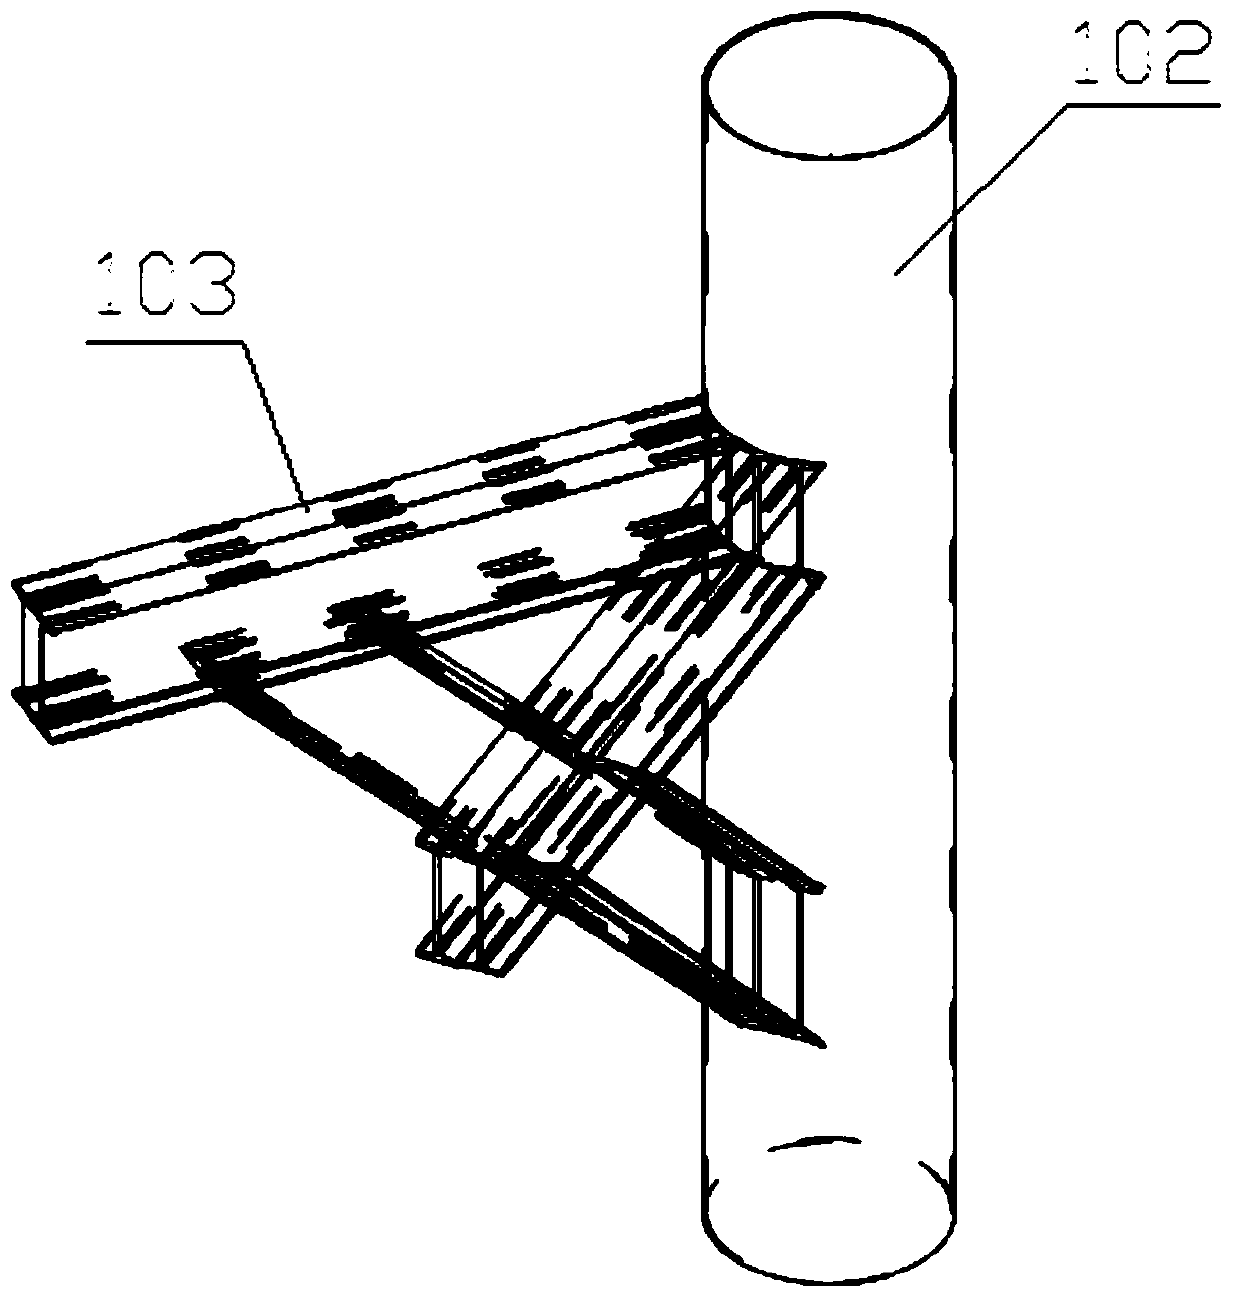 Construction method of double-wall deformed steel cofferdam lowering